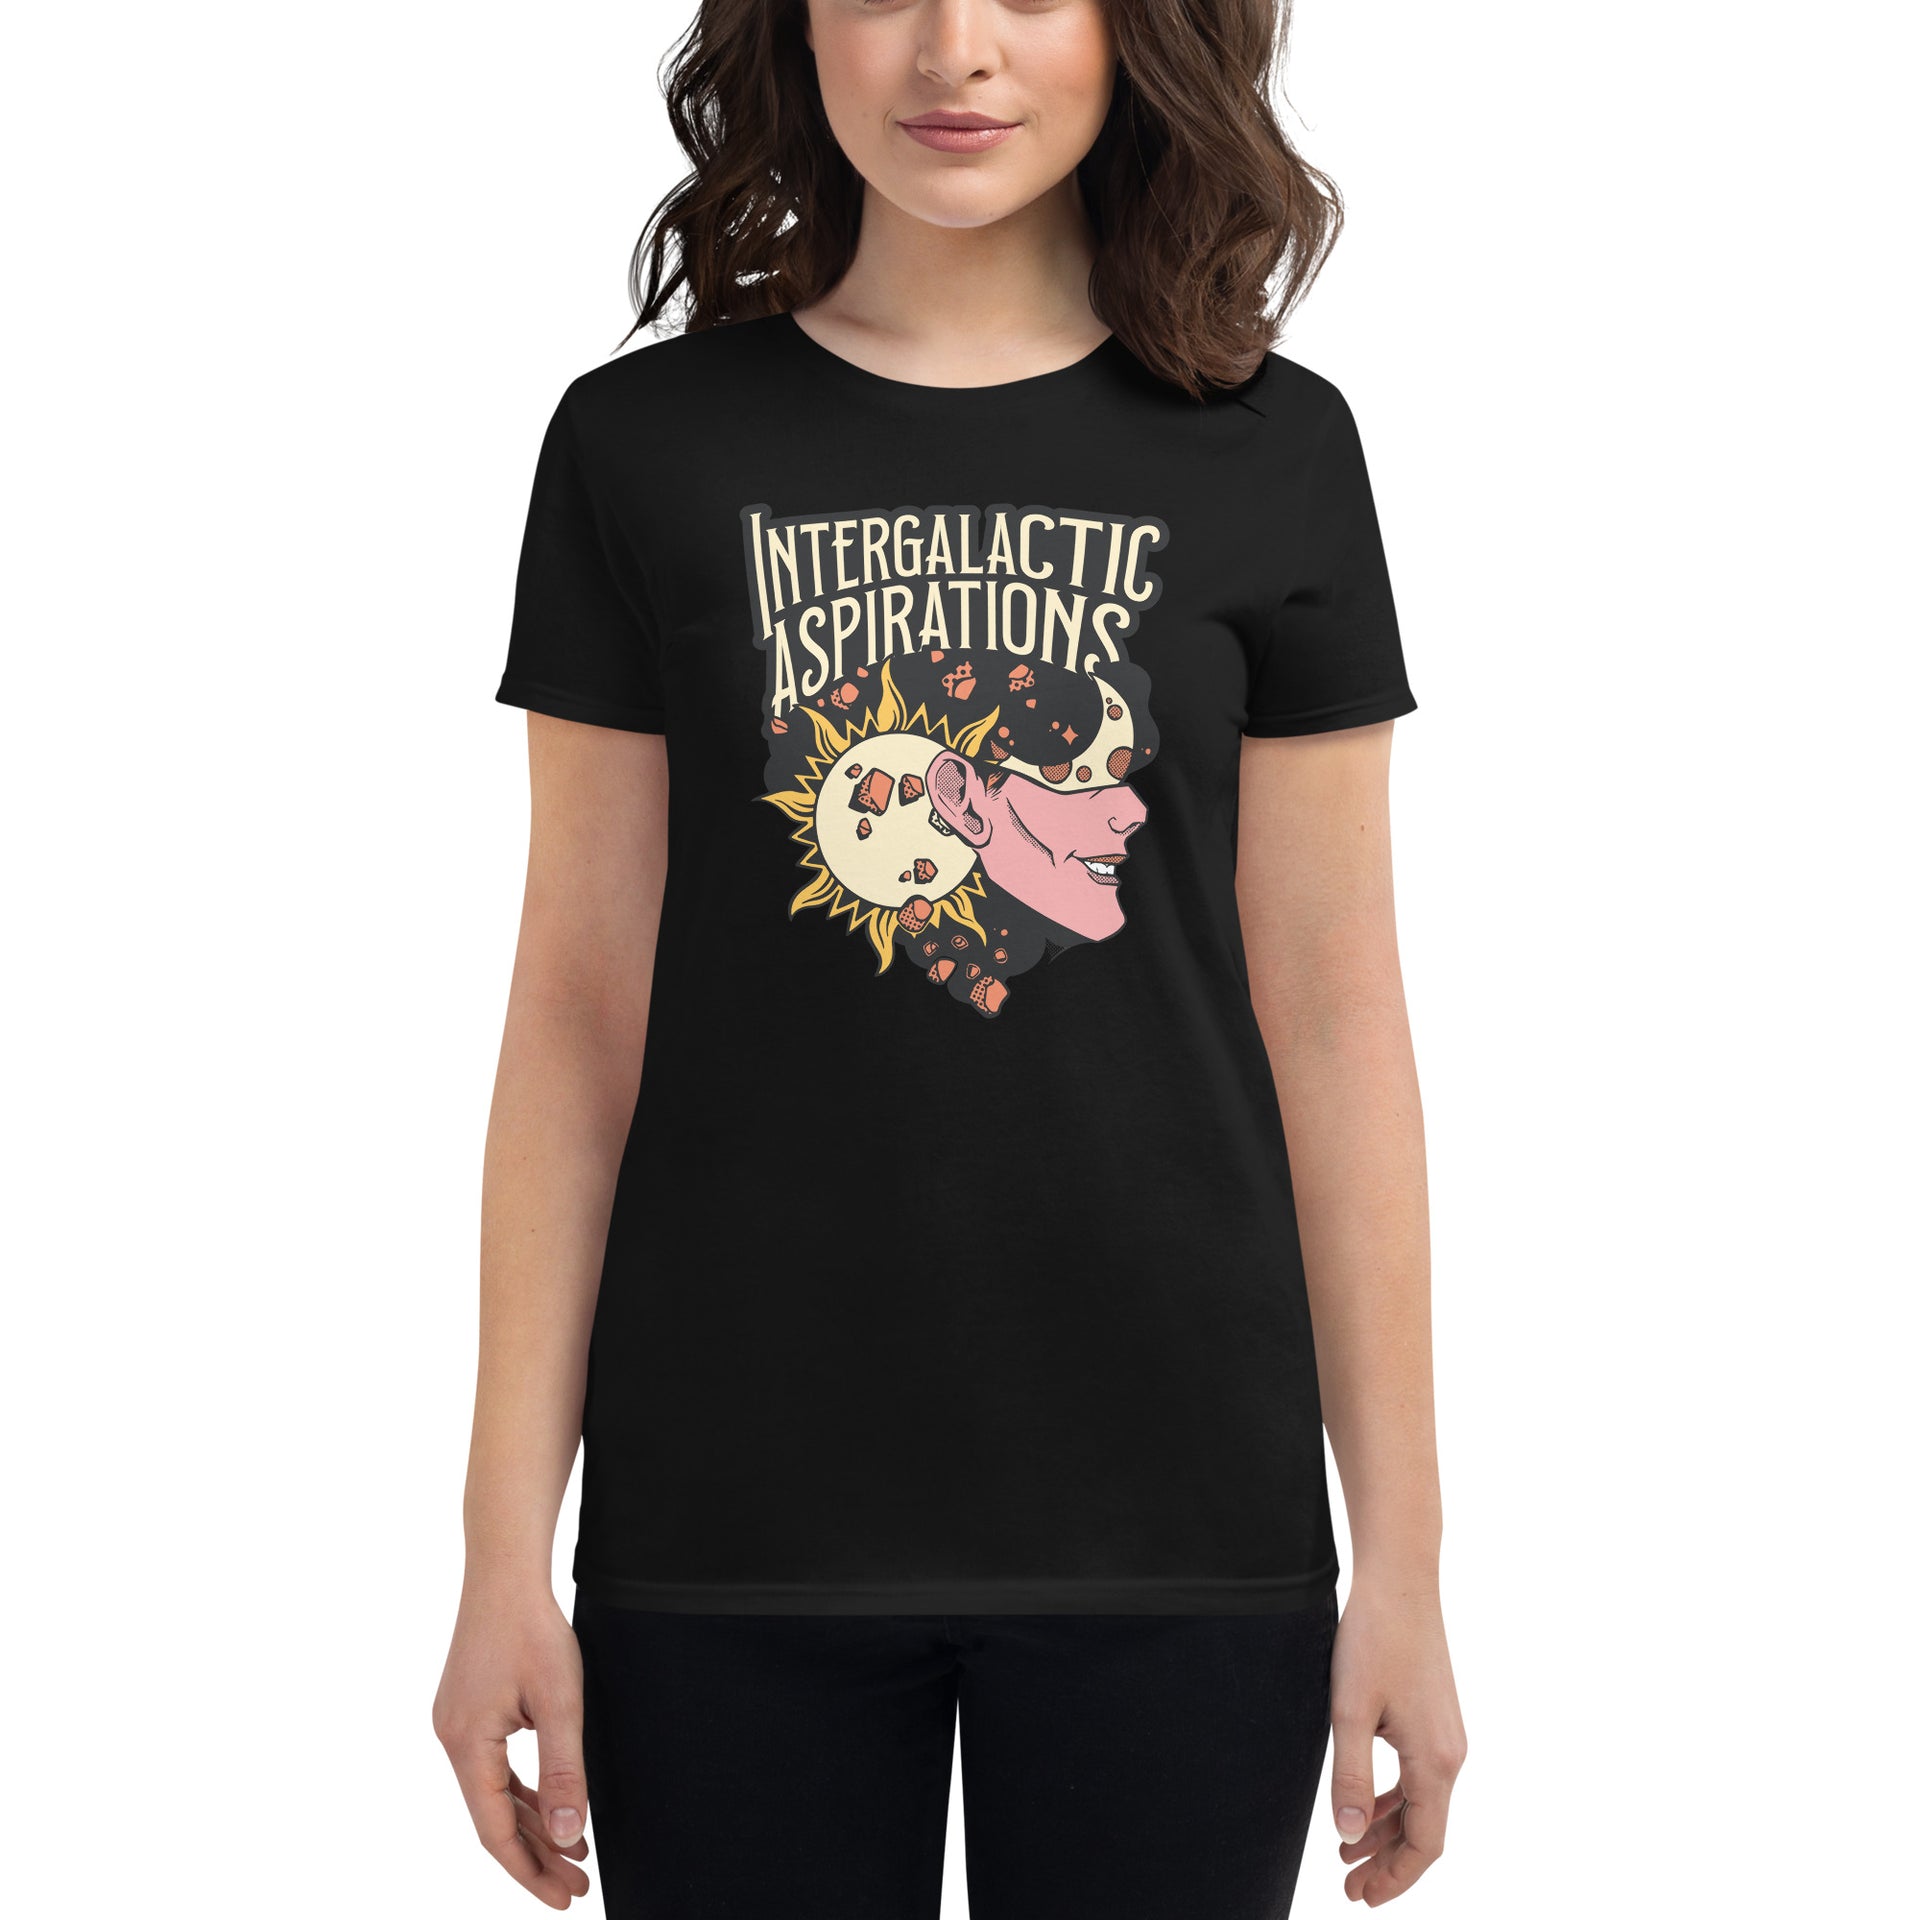 Intergalactic Aspirations Women's T-Shirt